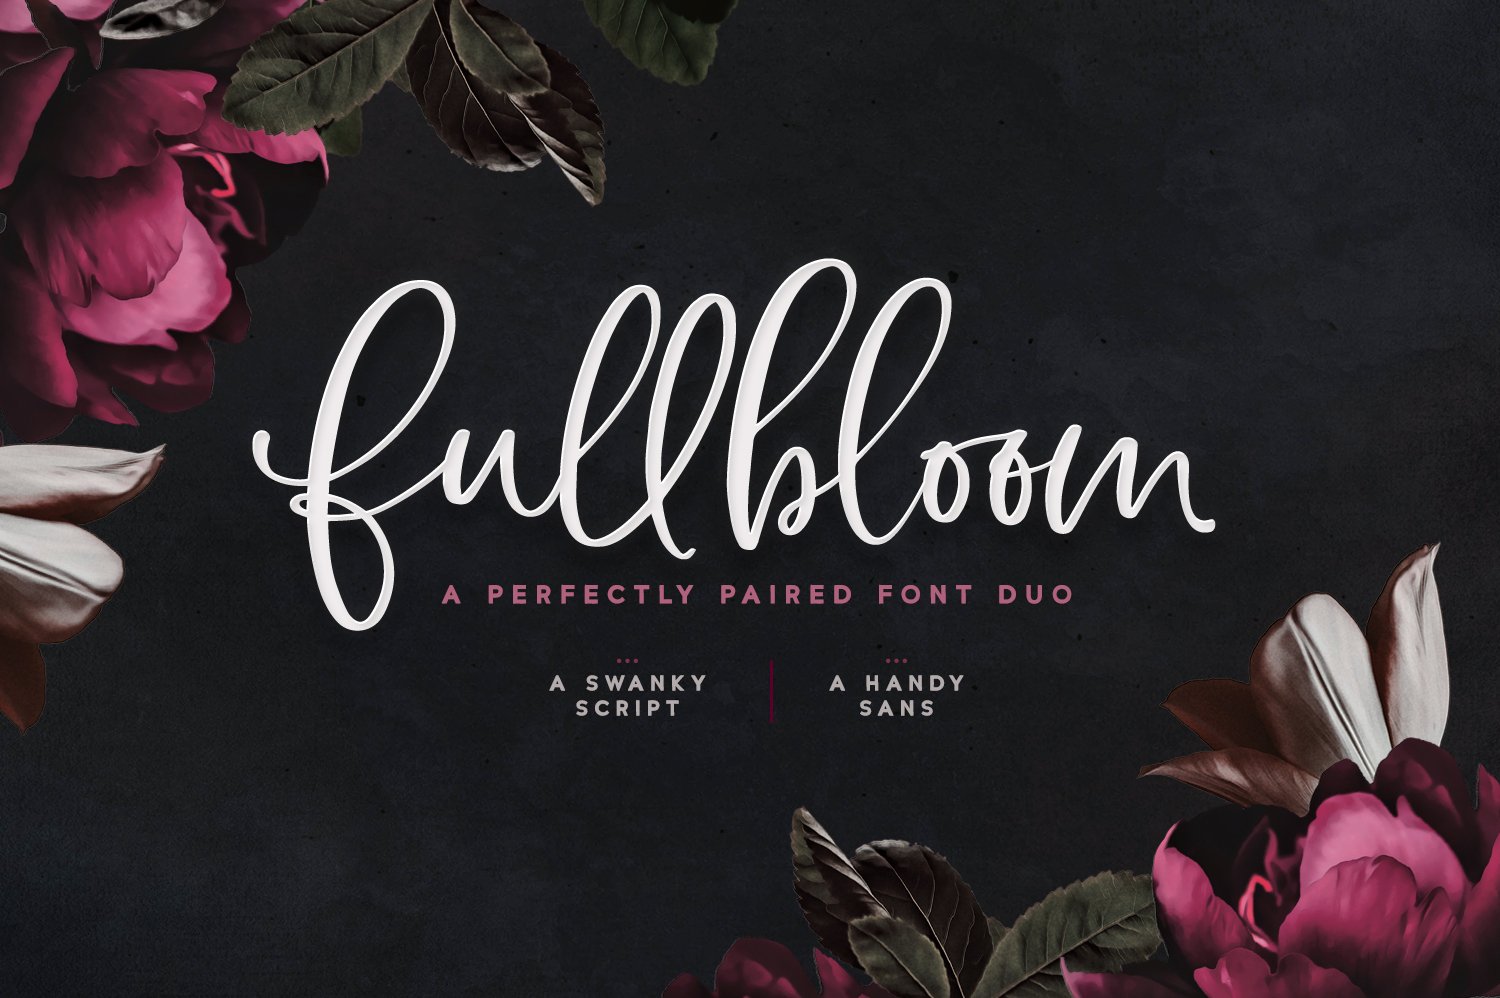 Fullbloom Font Duo cover image.